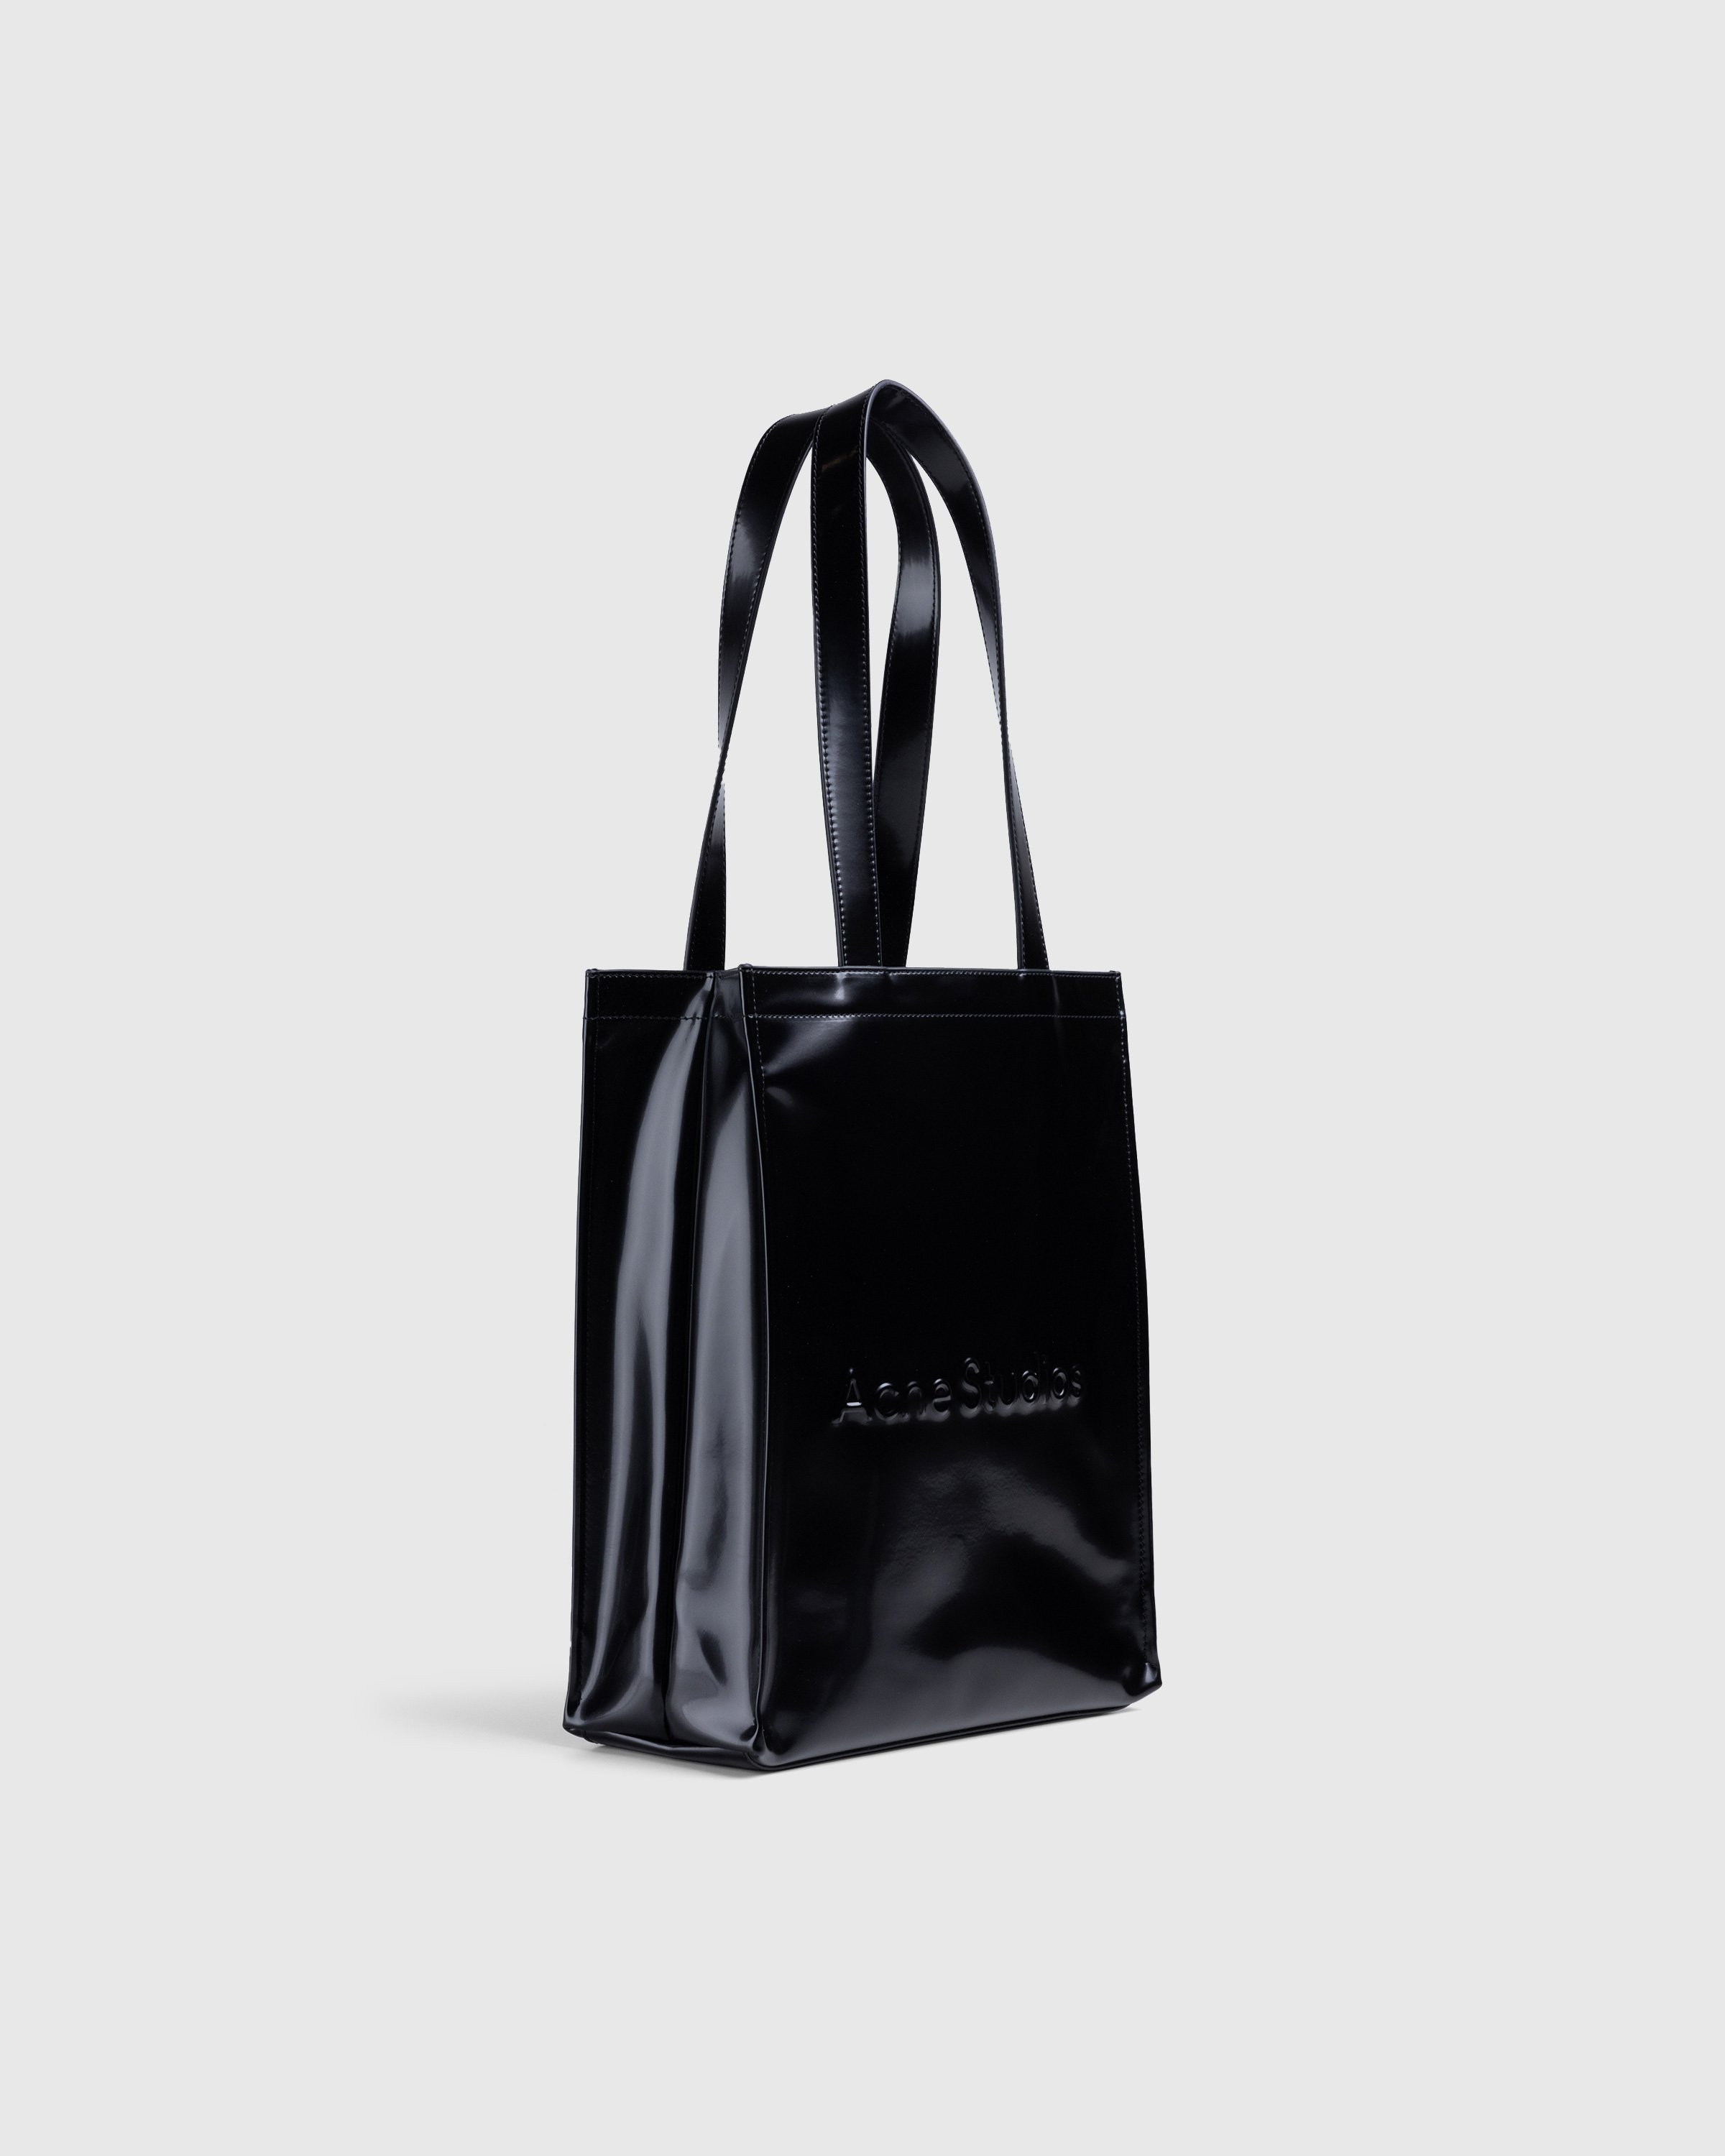 Acne Studios - Logo Shoulder Tote Bag Black - Accessories - Black - Image 3